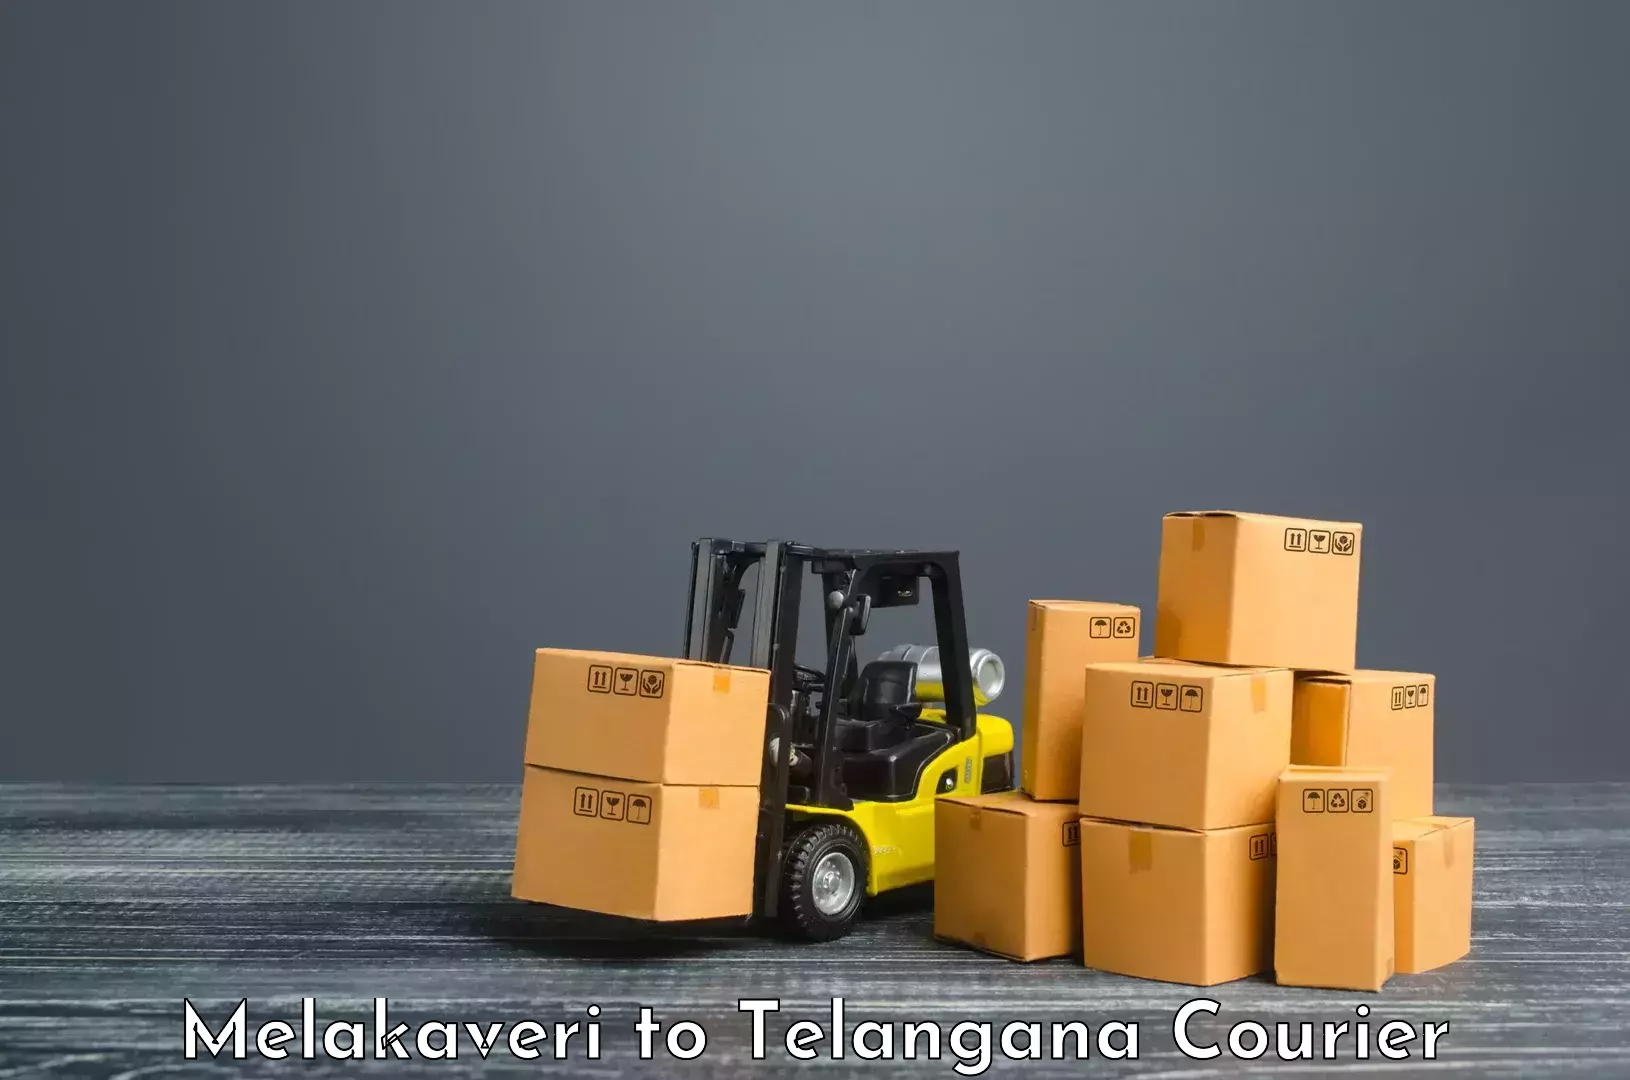 Courier service comparison Melakaveri to Yacharam